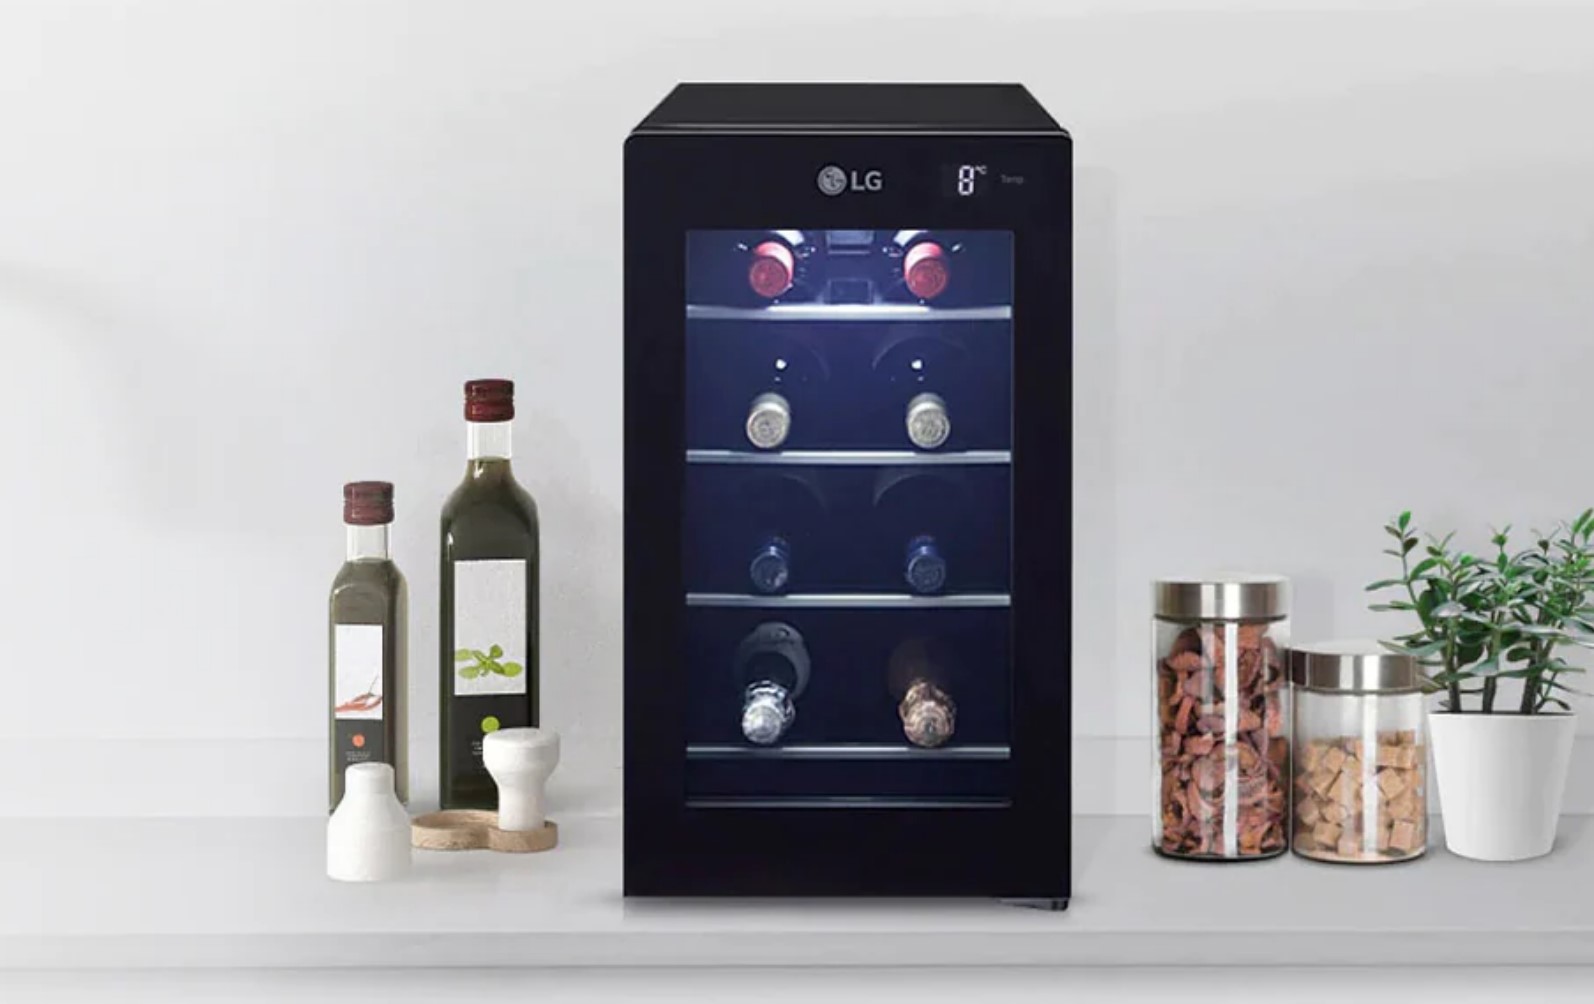 LG 8-bottle mini-Wine Fridge (review)